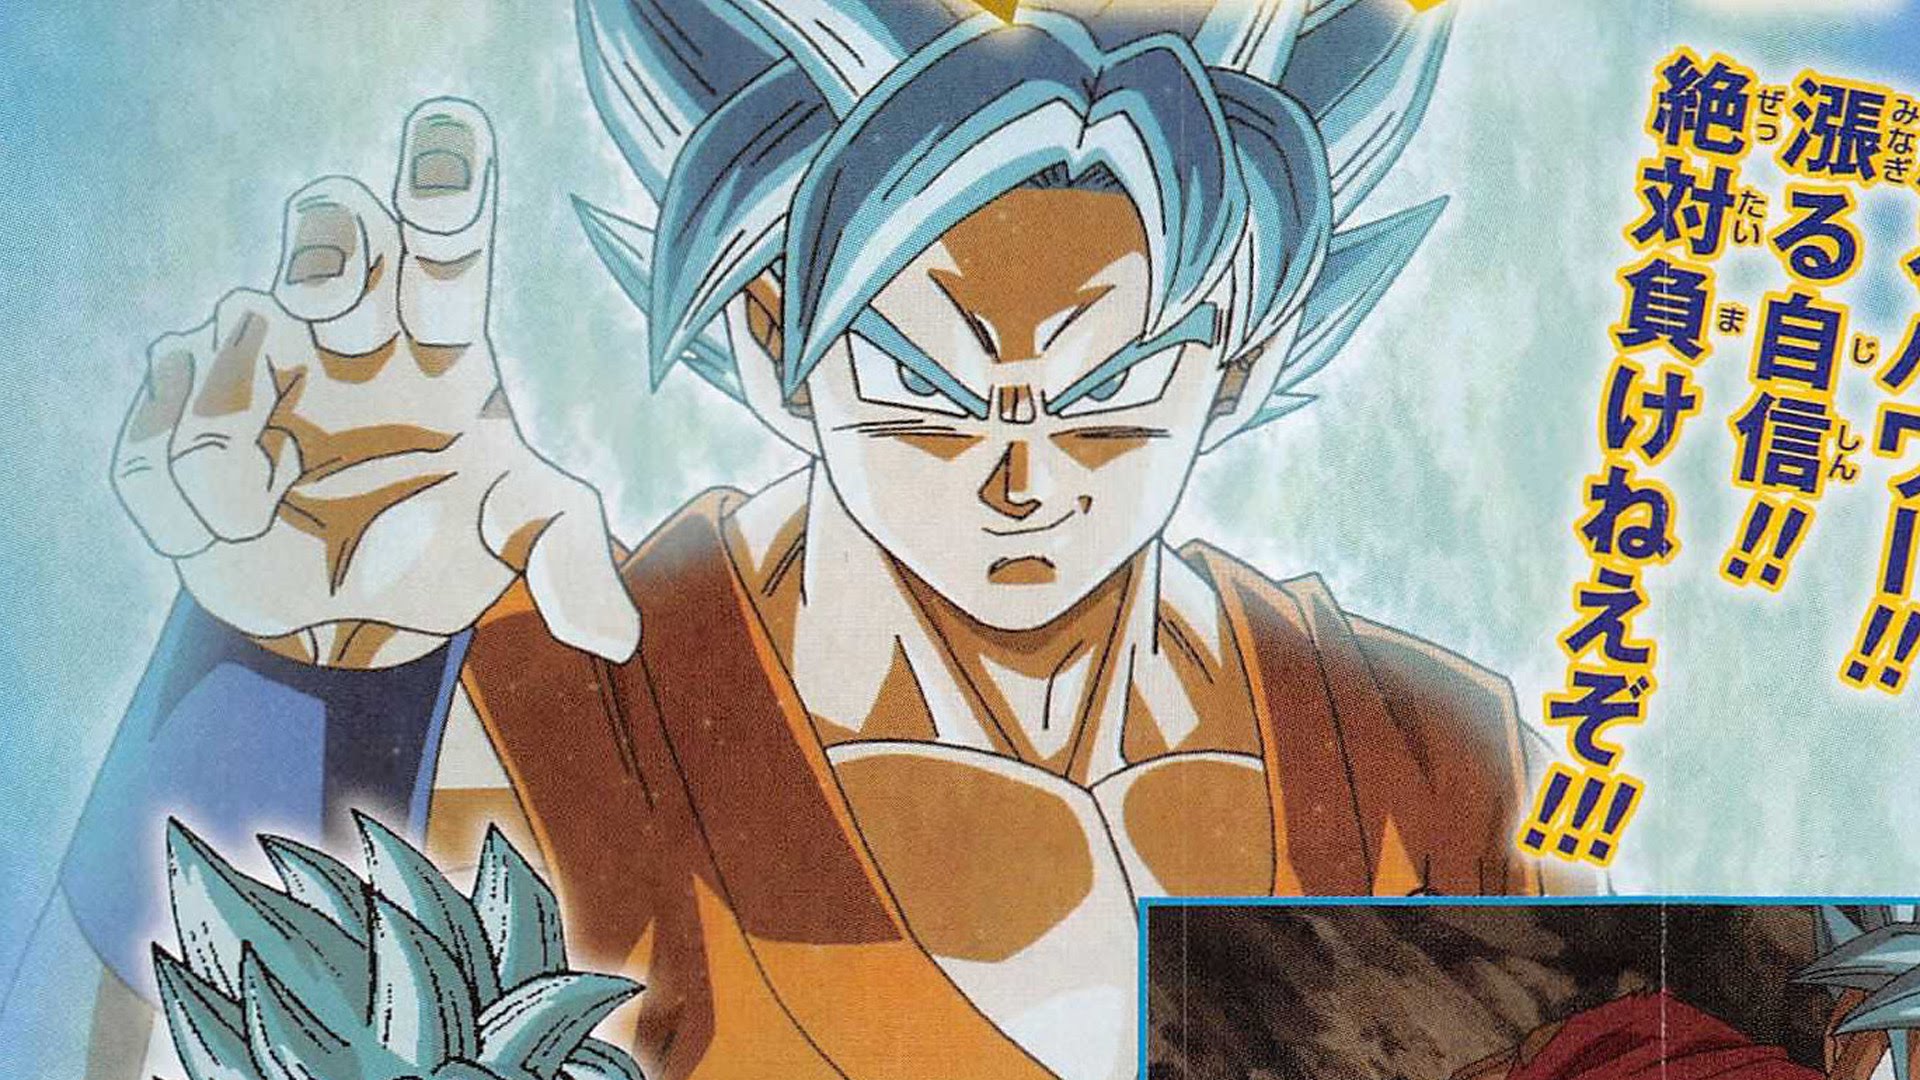 Super Saiyan God Ssgss Goku S New Transformation